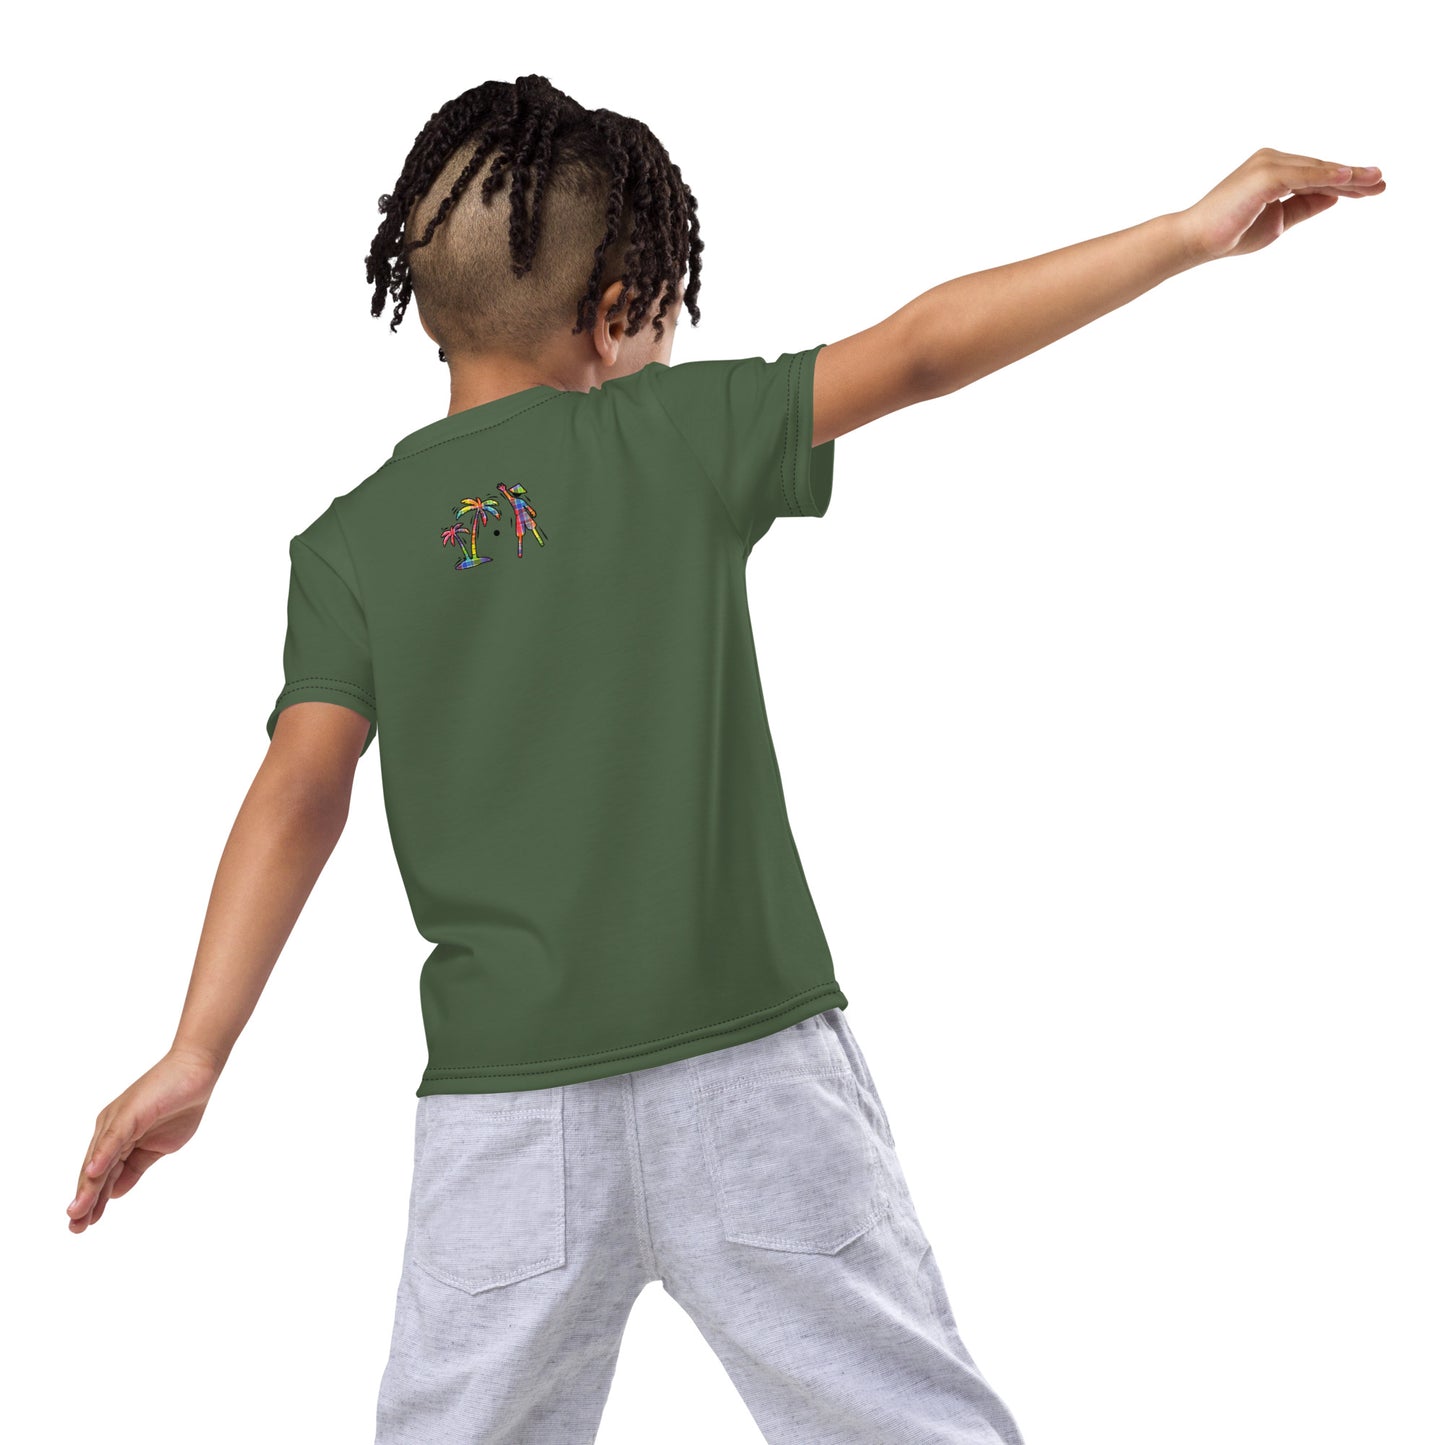 Olive  V.Localized (Gold Madras) Dry-Fit Kids  T-Shirt